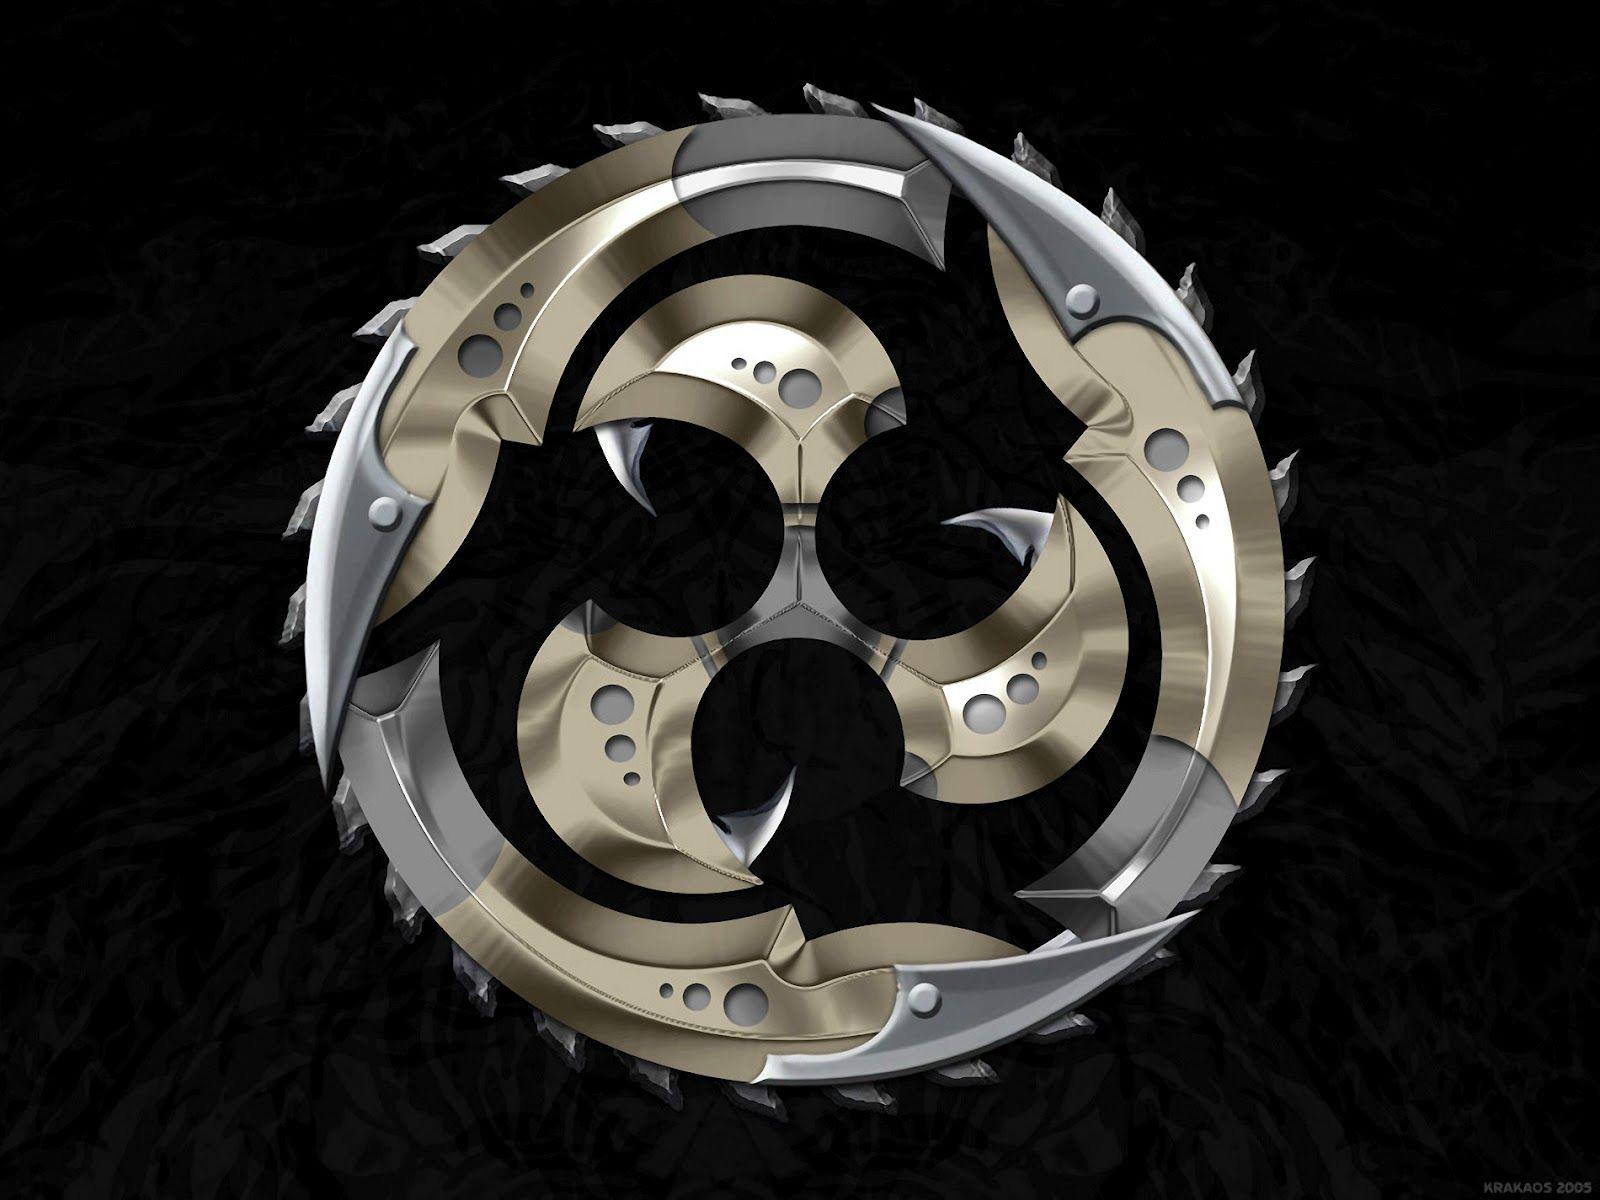 Trivium Logo - kgoupil American Popular Music Module 5 Project: Cool Trivium Logo's